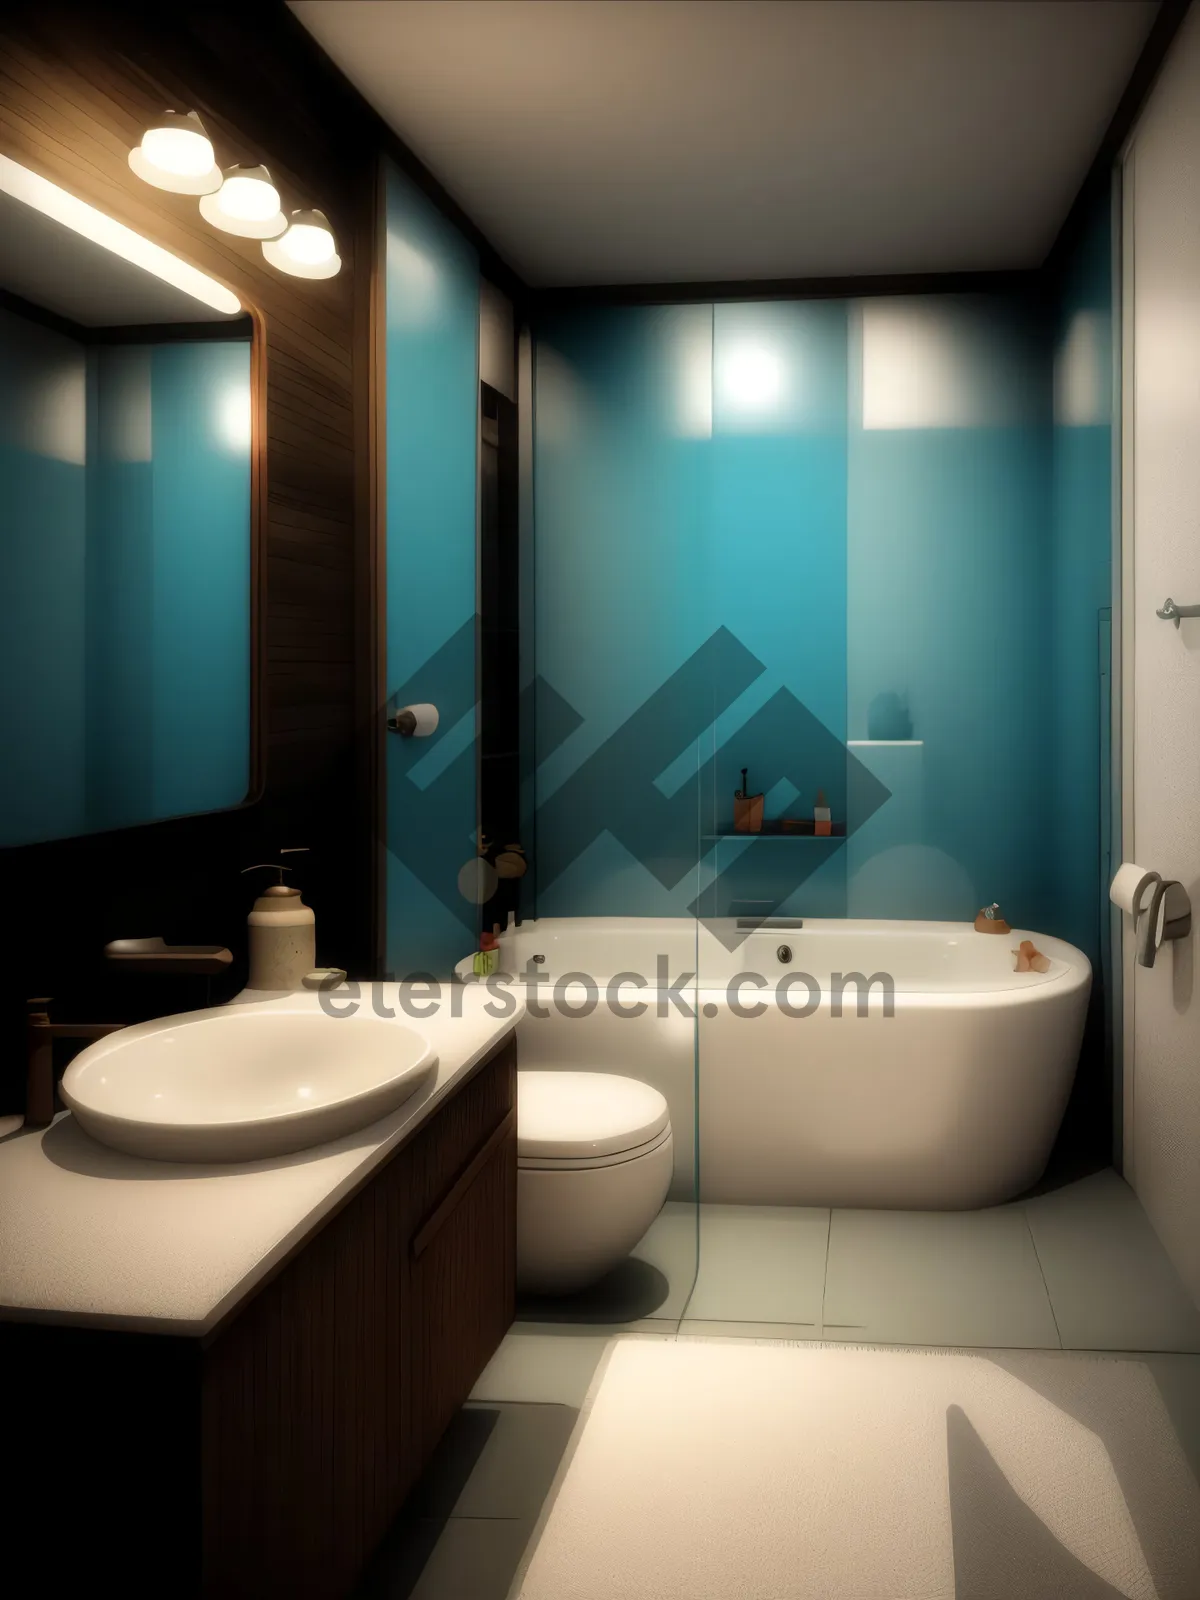 Picture of Modern Luxury Wood-Paneled Bathroom with Elegant Fixtures